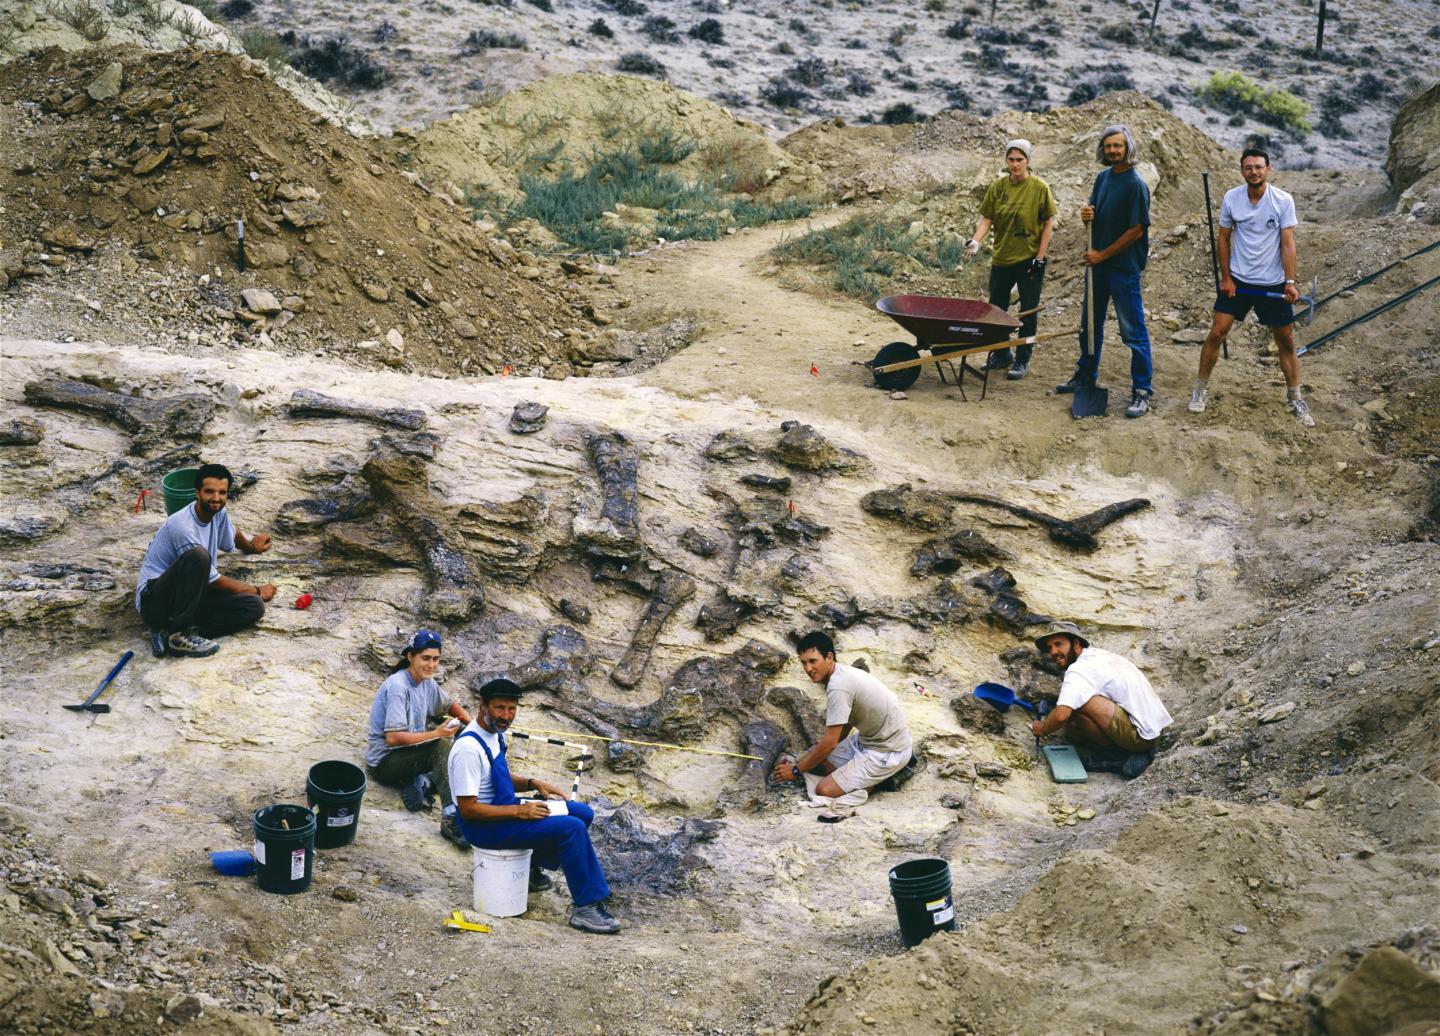 The bones found during excavations